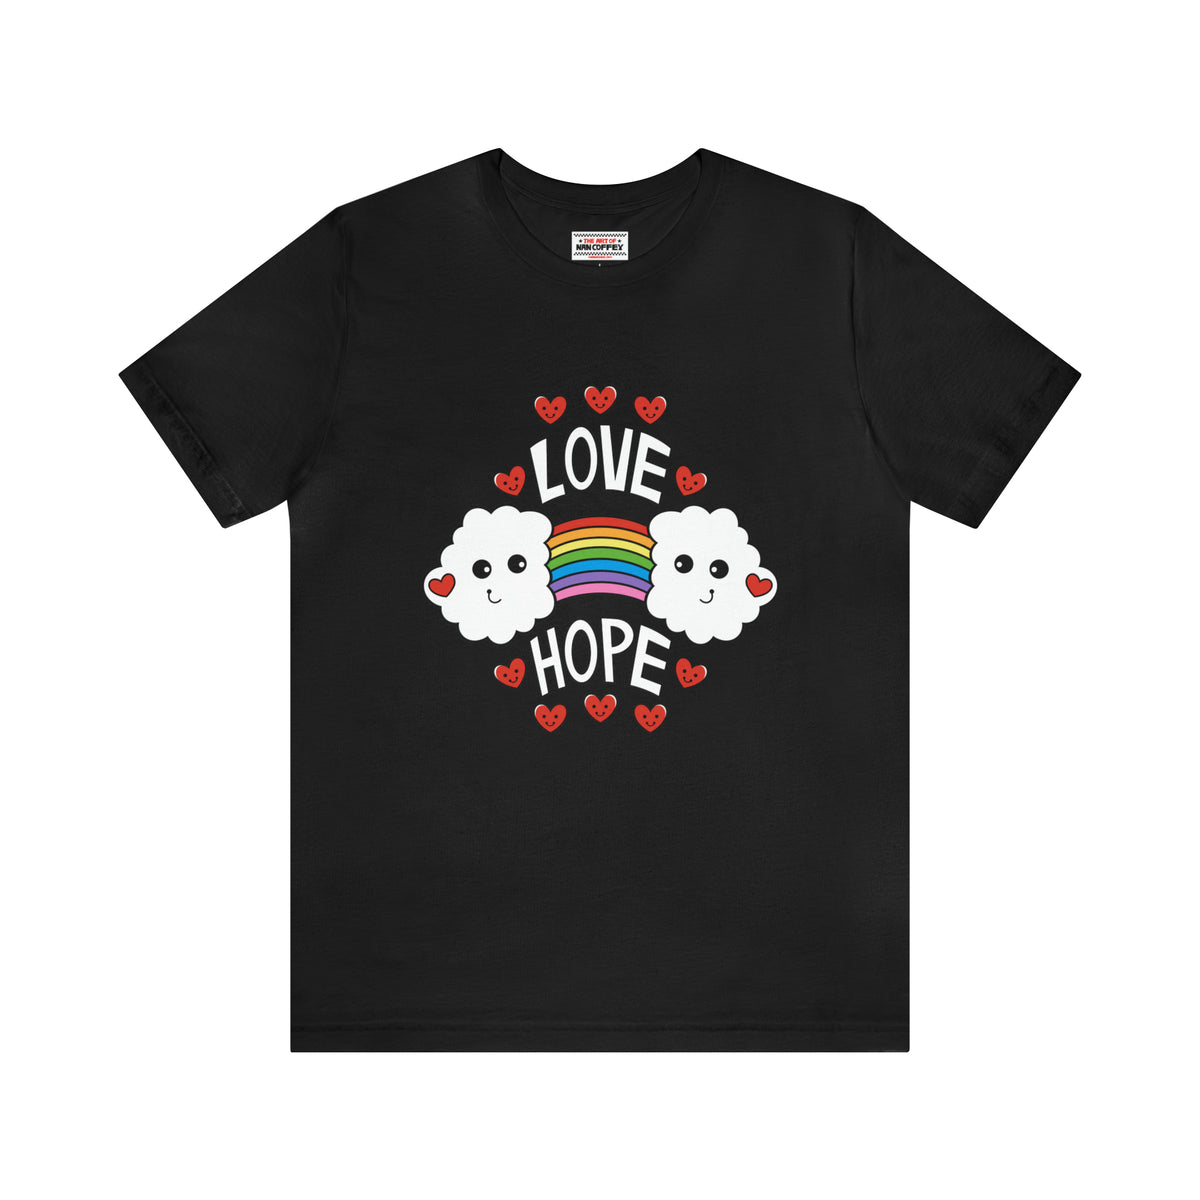 Love Hope - Band Style Tee